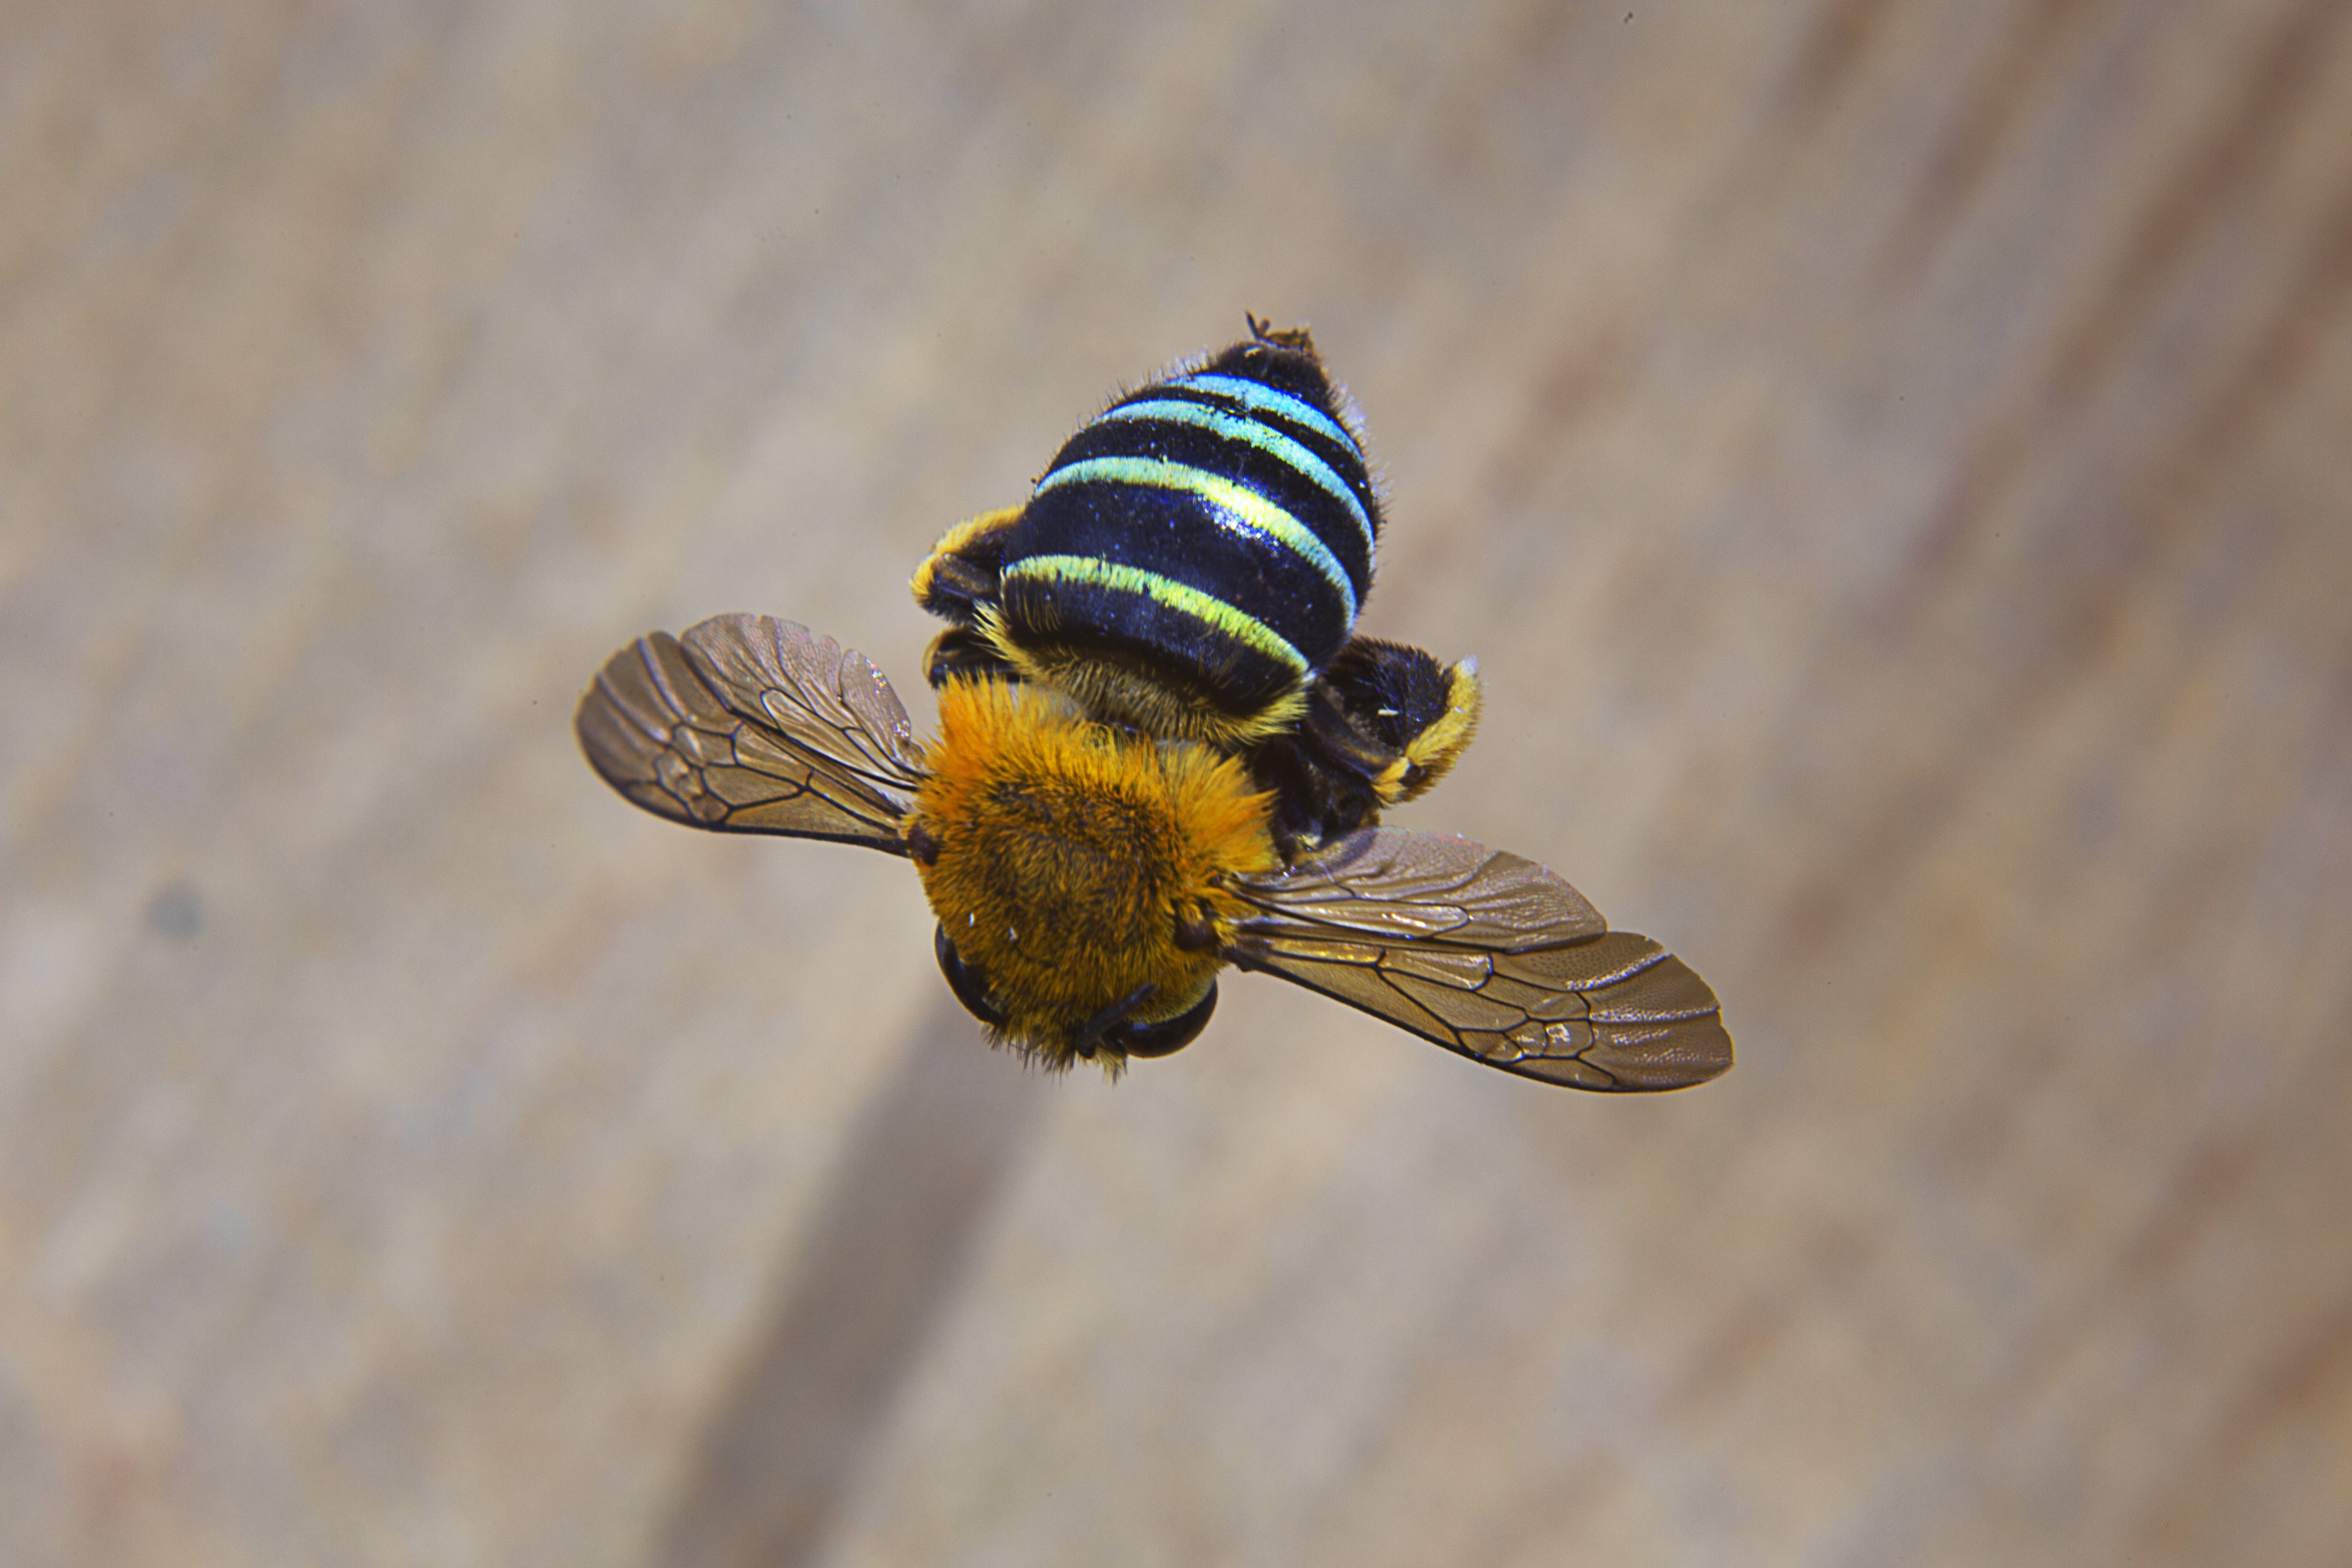 Полосатые пчелы. Пчела-плотник Xylocopa caerulea. Xylocopa caerulea. Синяя пчела. Необычные пчелы.